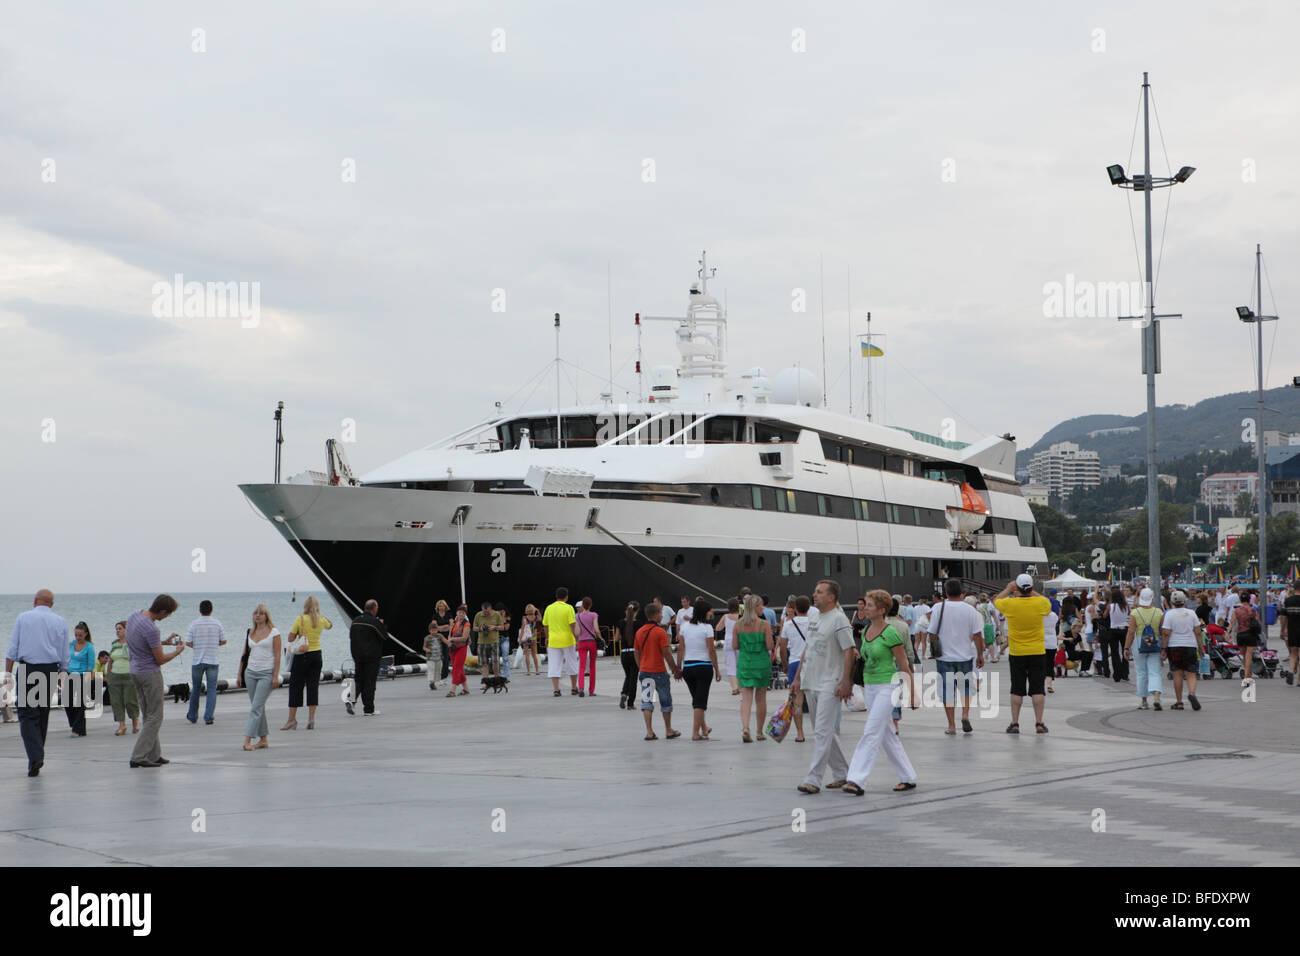 Le Levant Luxury Cruise Liner in Yalta port, Republic of Crimea, Ukraine Stock Photo